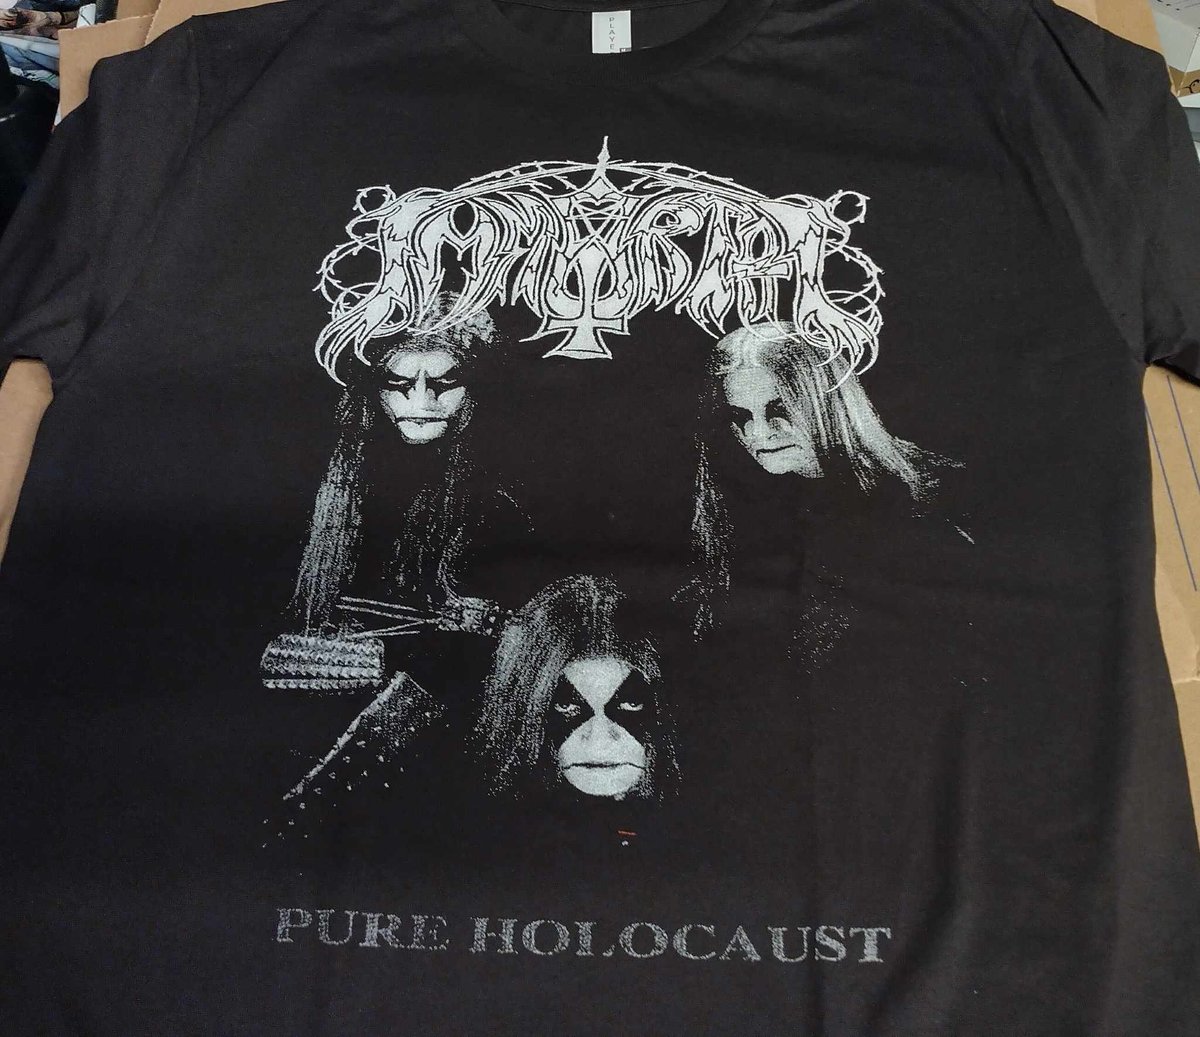 Immortal 'Pure Holocaust' T-Shirt